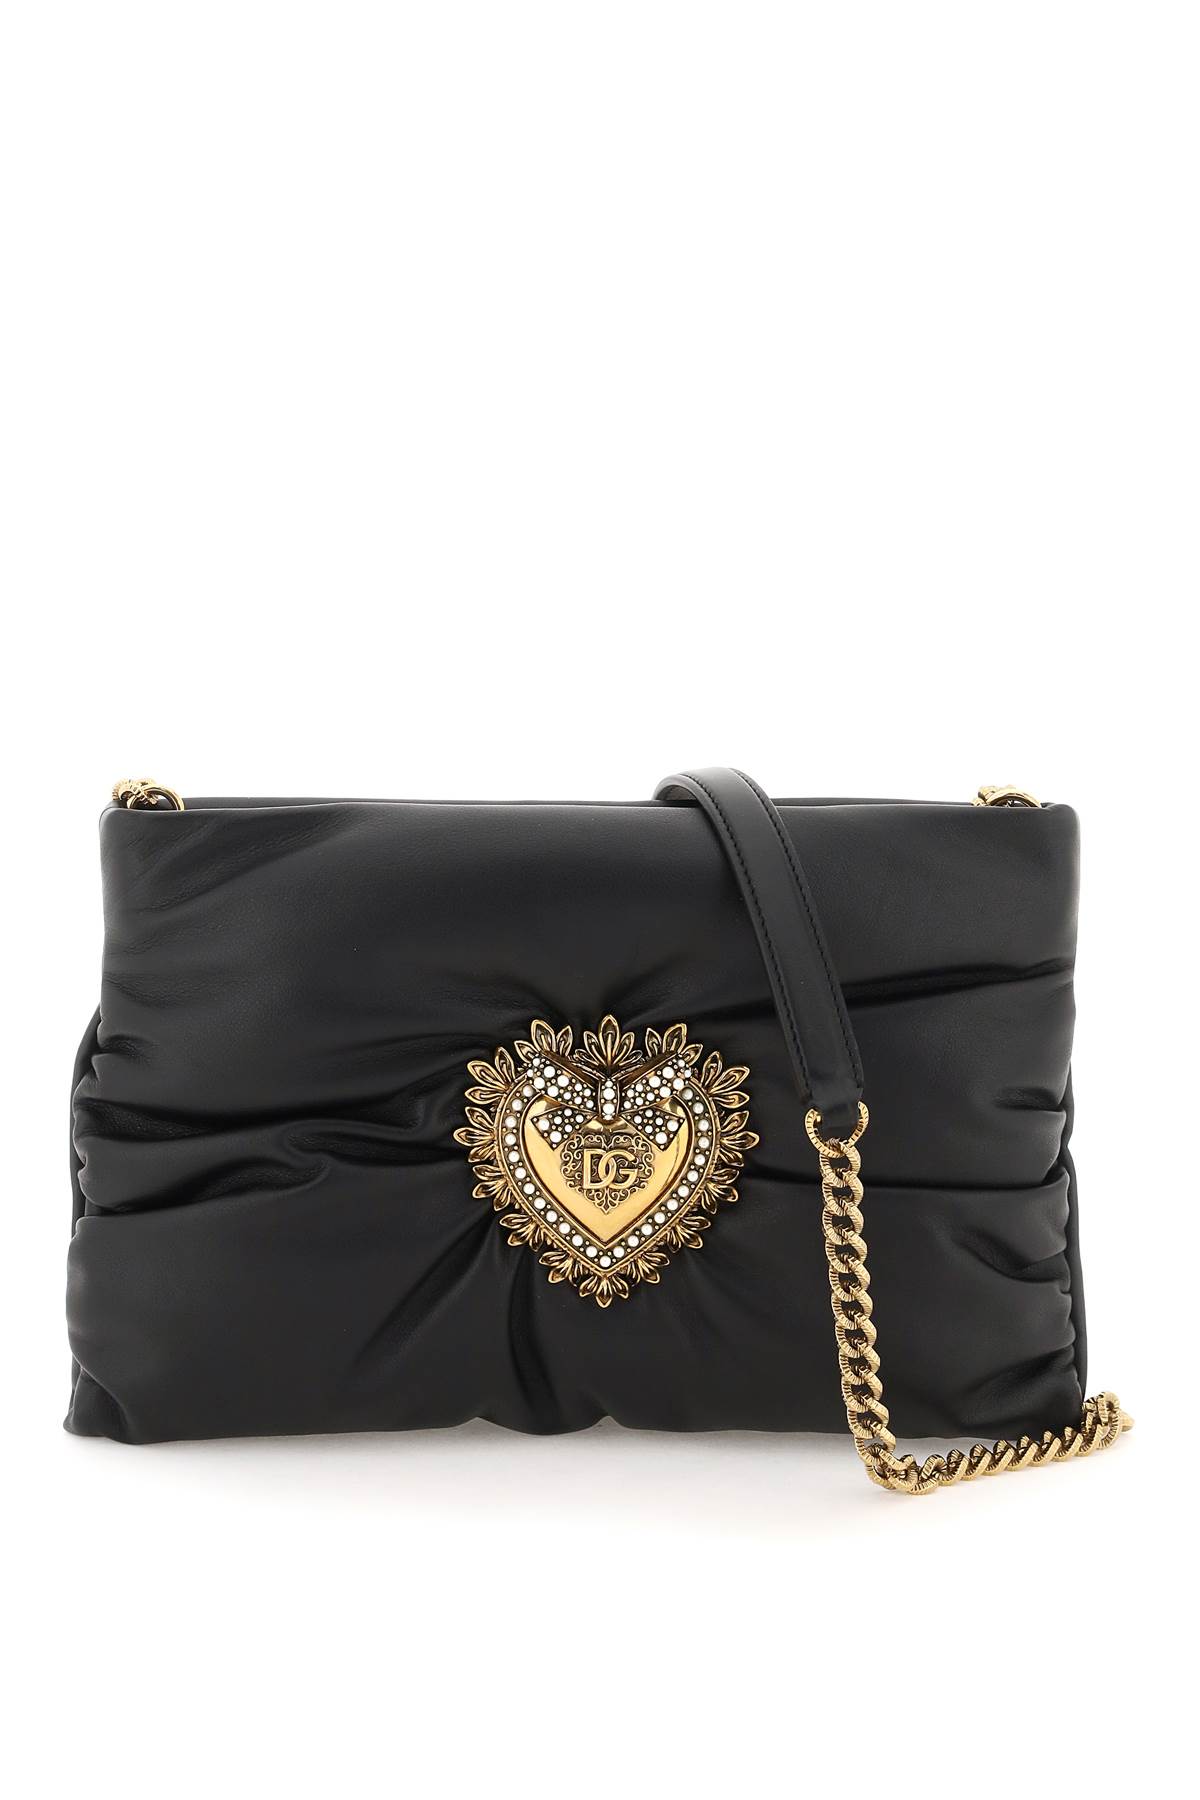 Dolce & Gabbana Devotion Soft Crossbody Bag In Nero